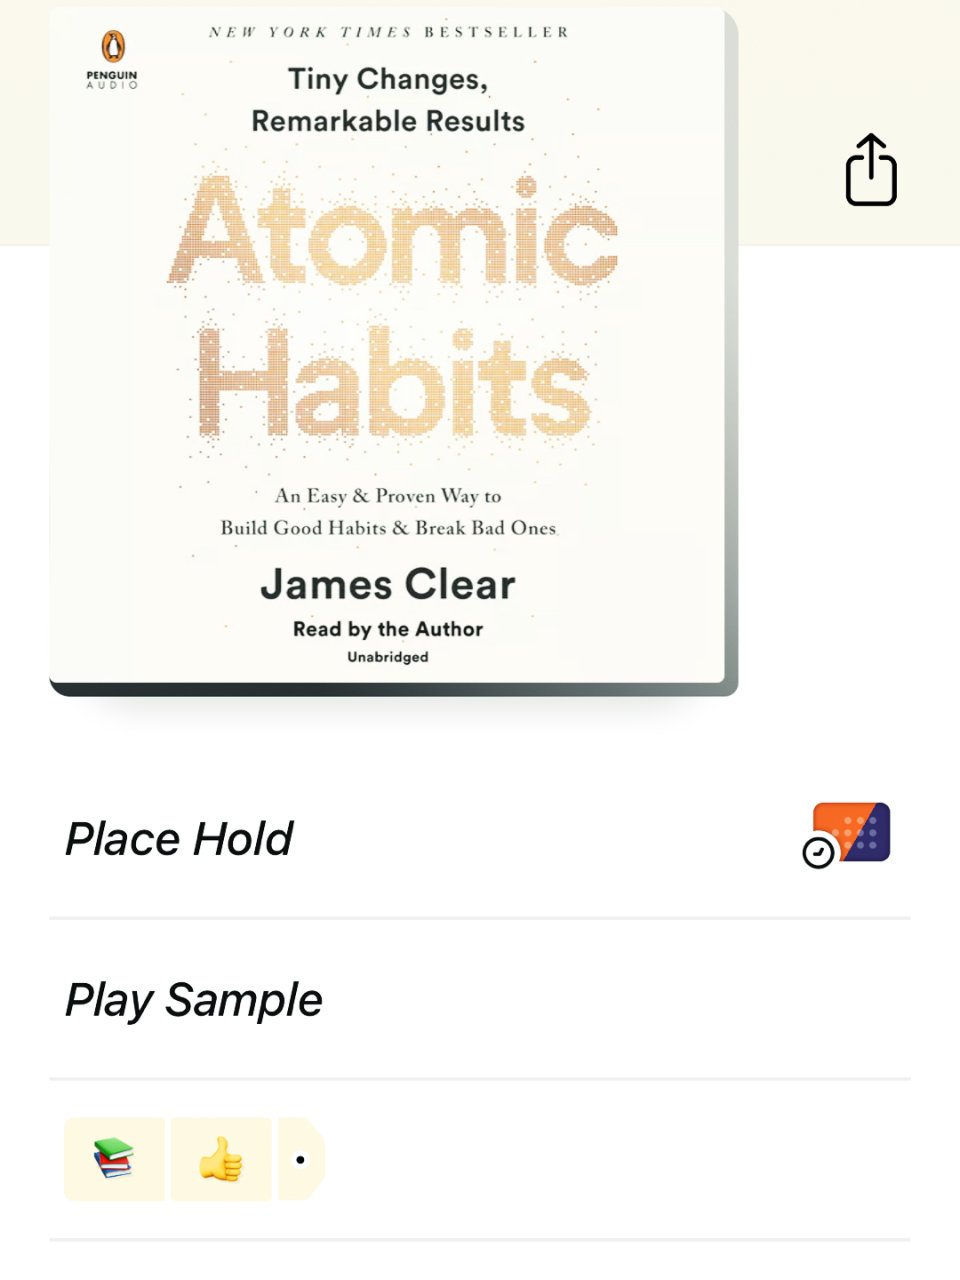 Atomic habits 